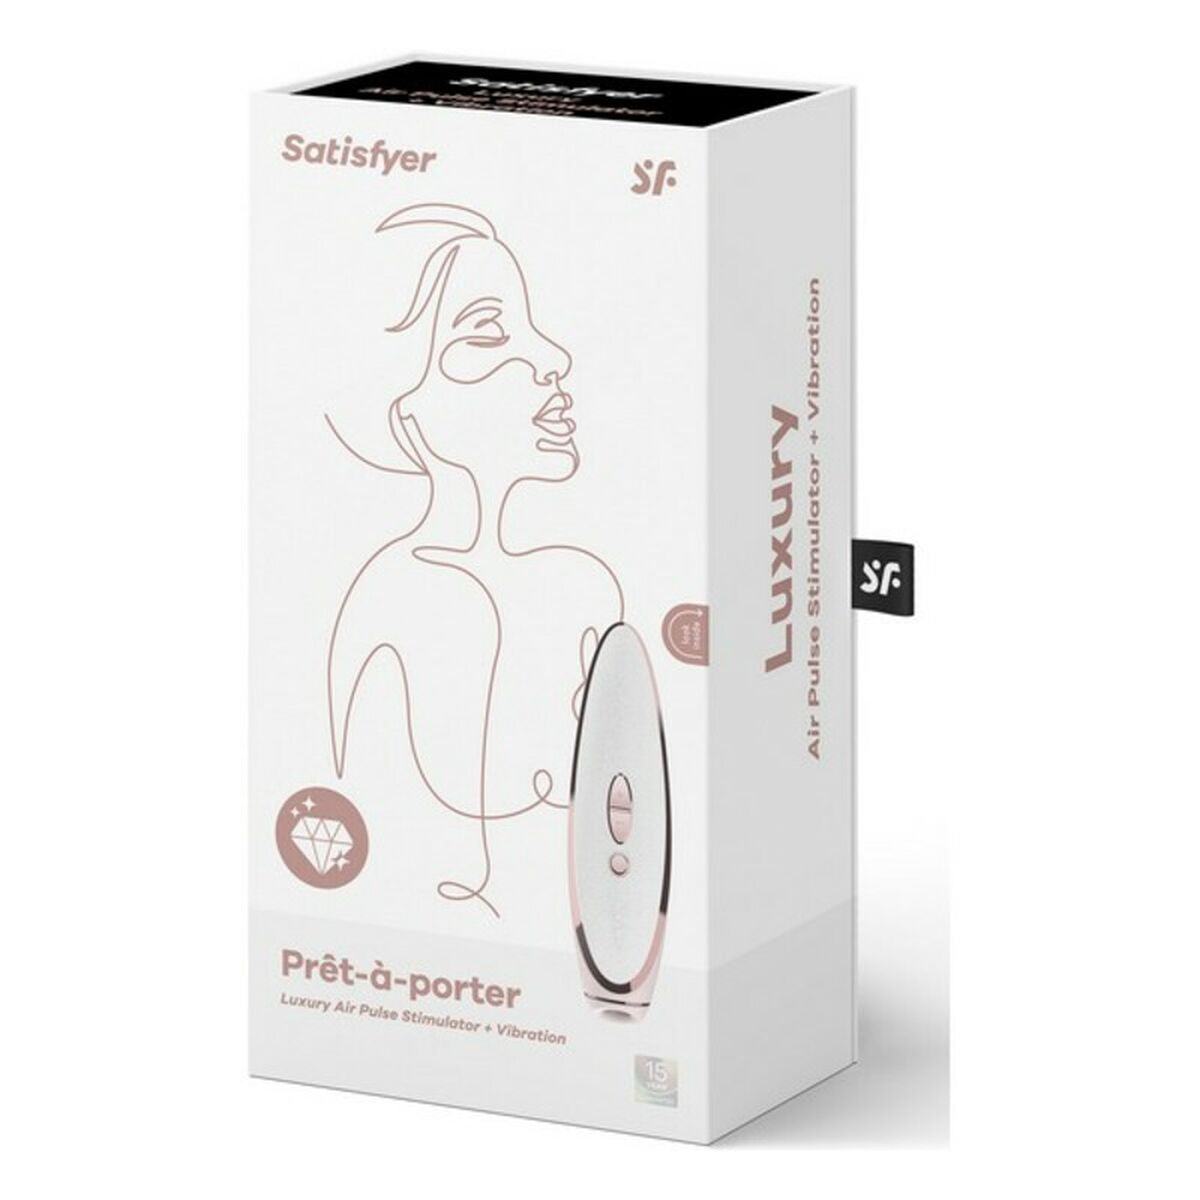 Kaufe Klitoris-Sauger Satisfyer Luxury Pret a Porter bei AWK Flagship um € 89.00